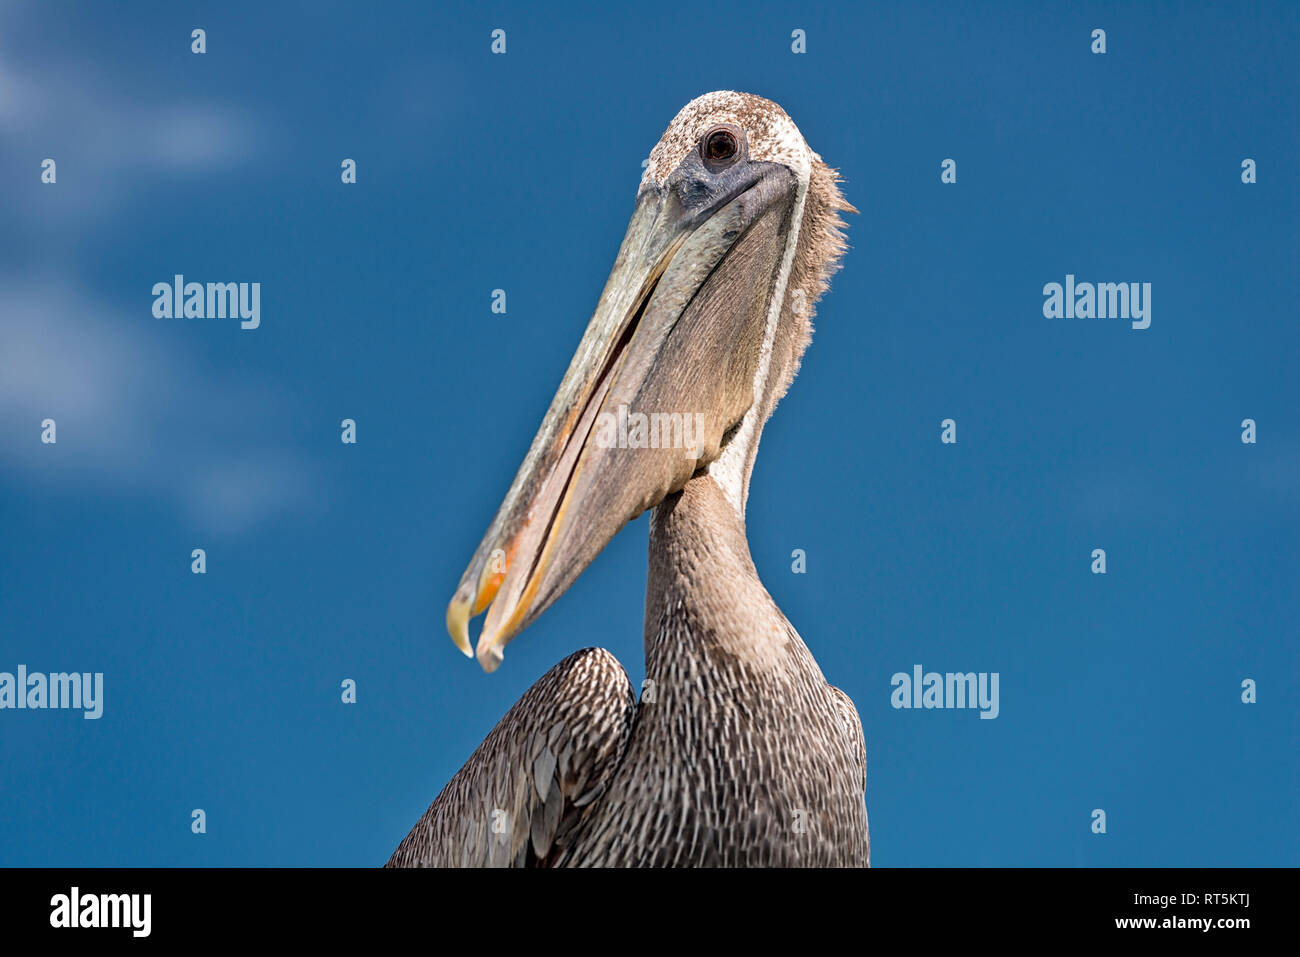 United States of America, Florida, Islamorada, Florida Keys, portrait of a Brown Pelican (Pelecanus occidentalis) against the sky Stock Photo